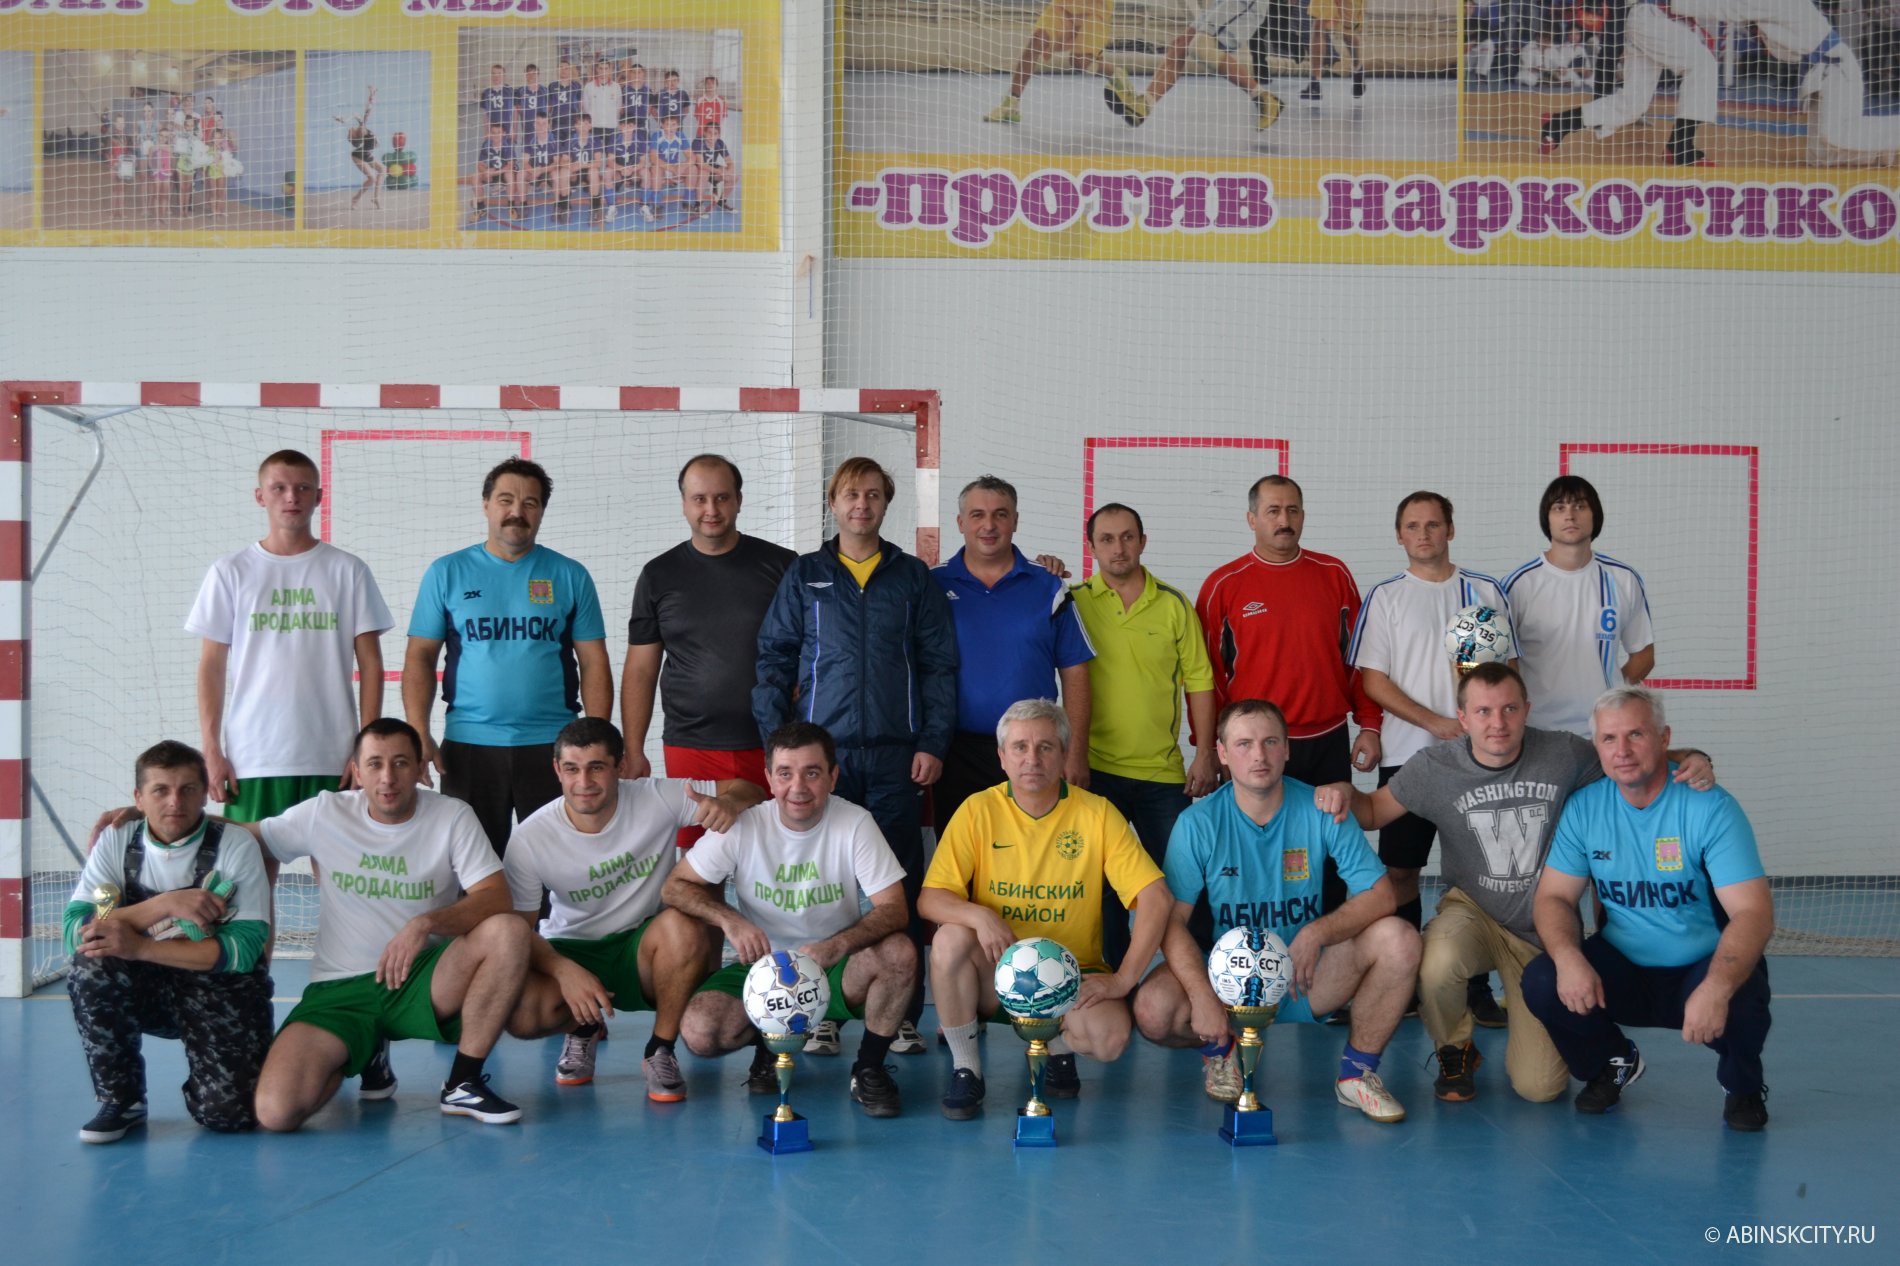 Абинск - футбольная команда